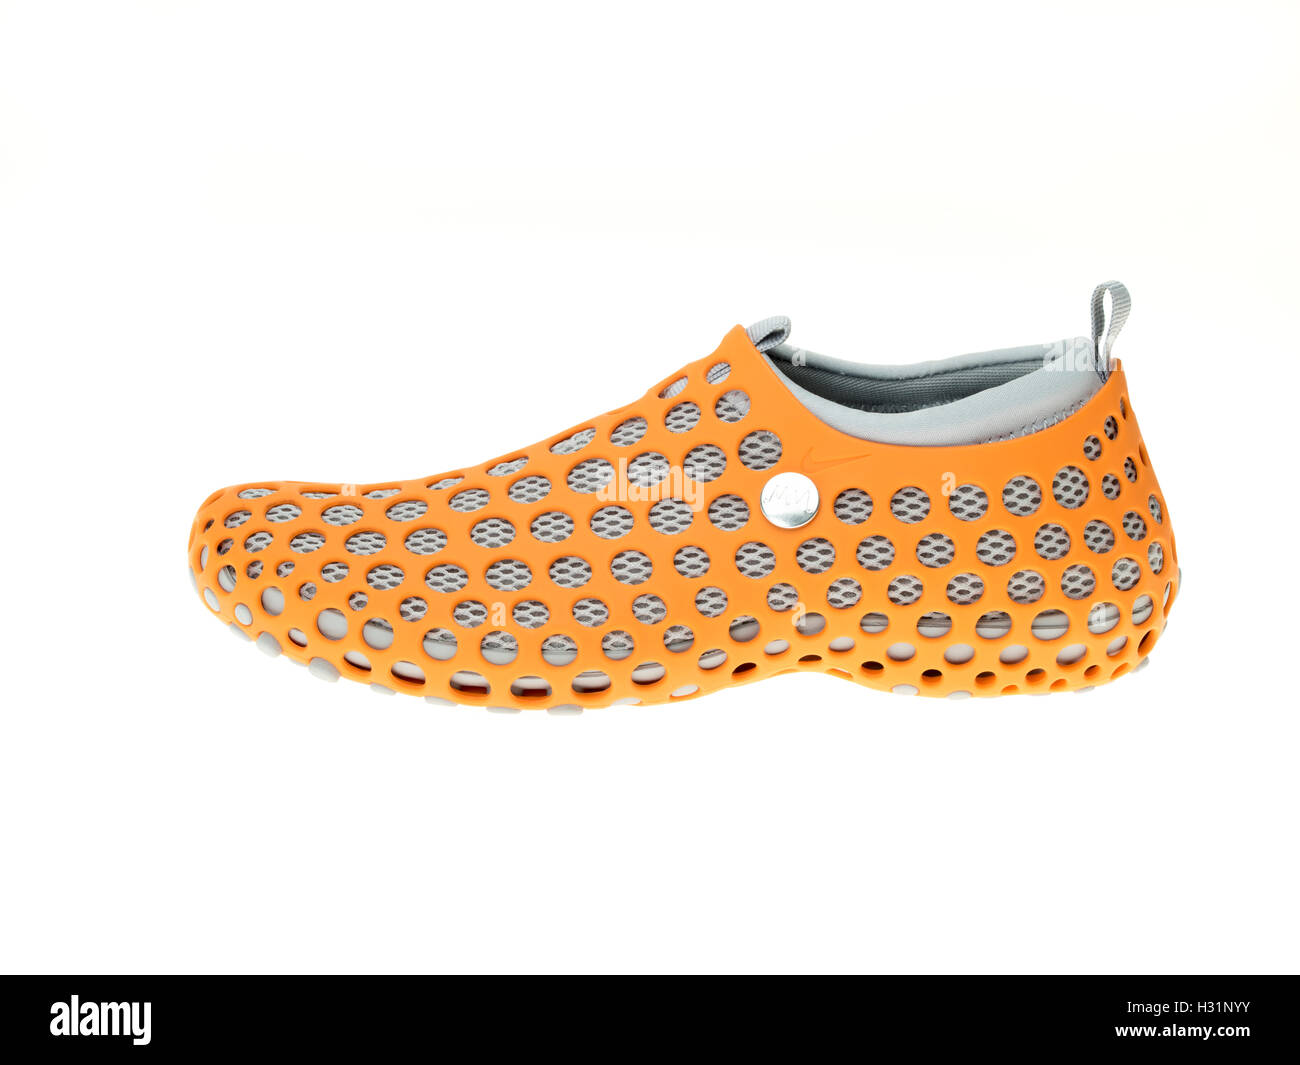 NIKE ZVEZDOCHKA sports shoes by industrial designer MARC NEWSON Stock Photo